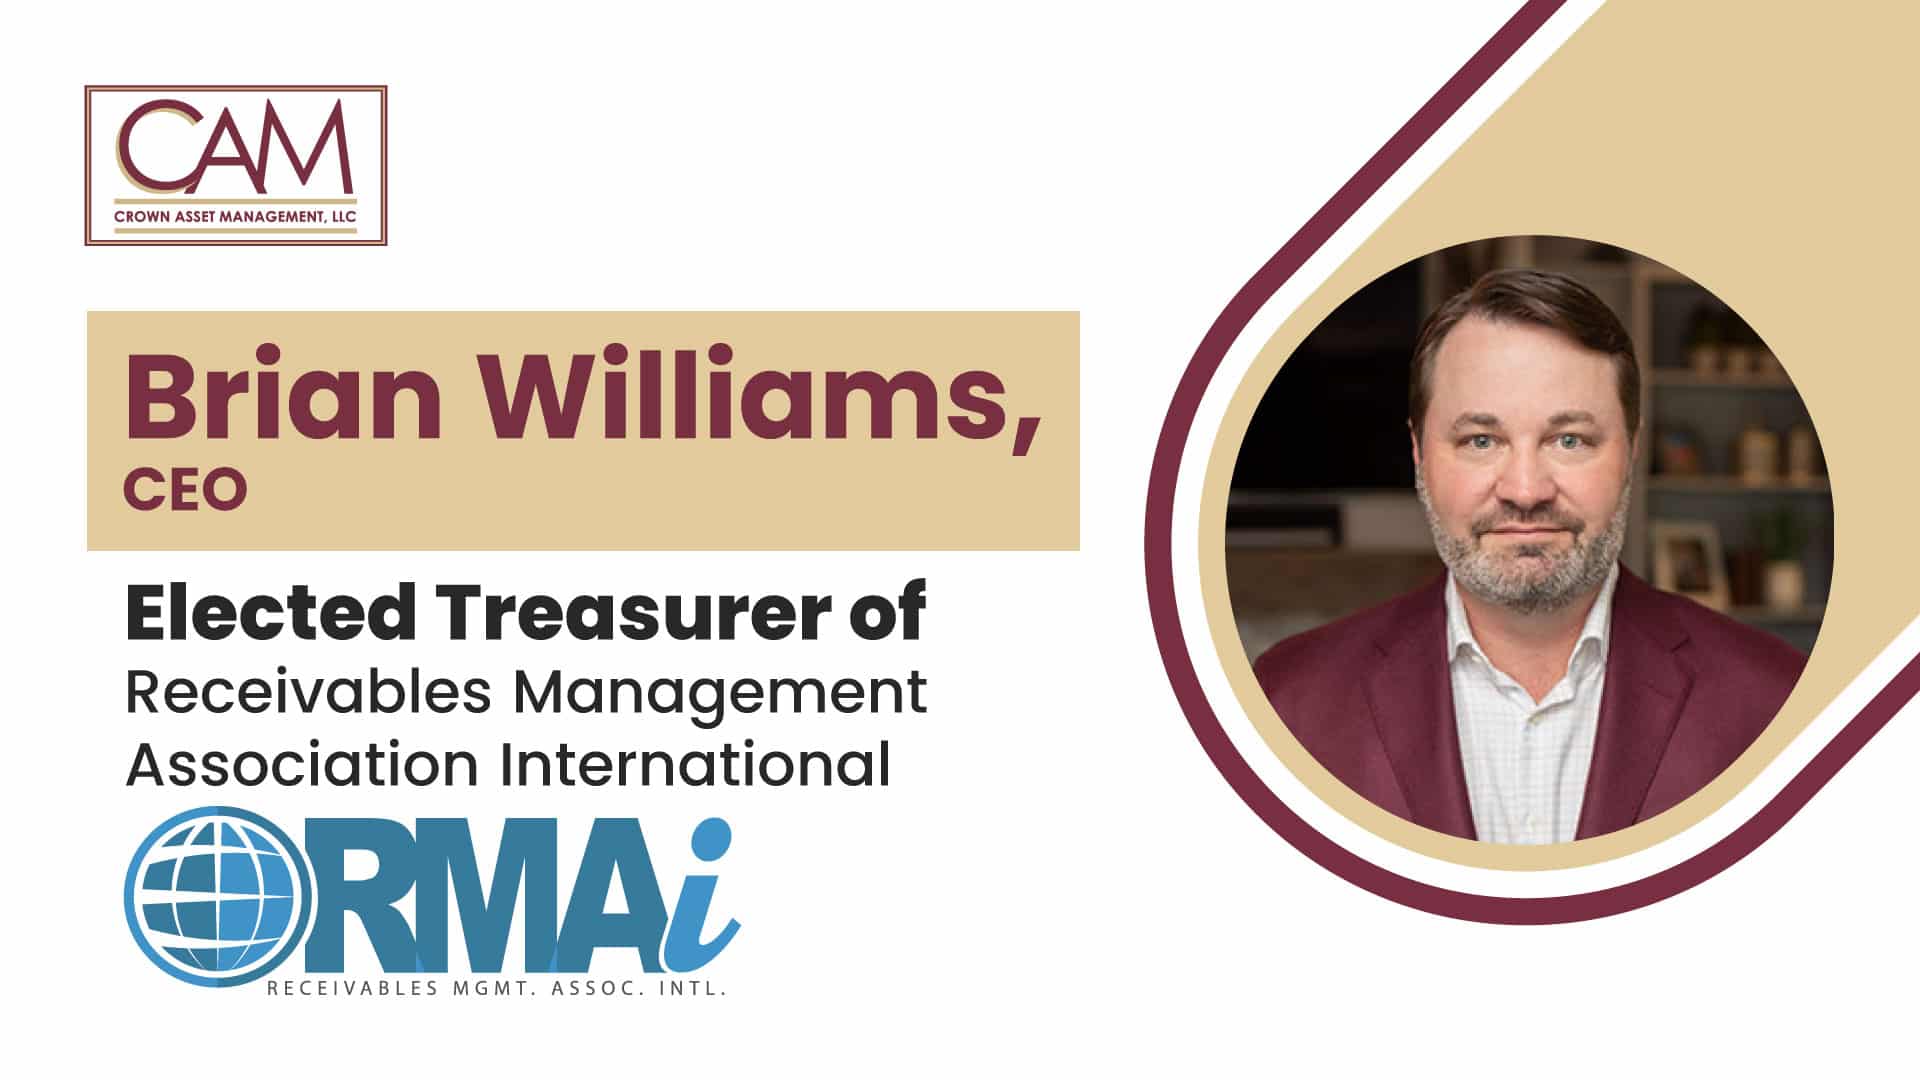 Brian Williams, CEO, elected Treasurer of Receivables Management Association International (RMAi)